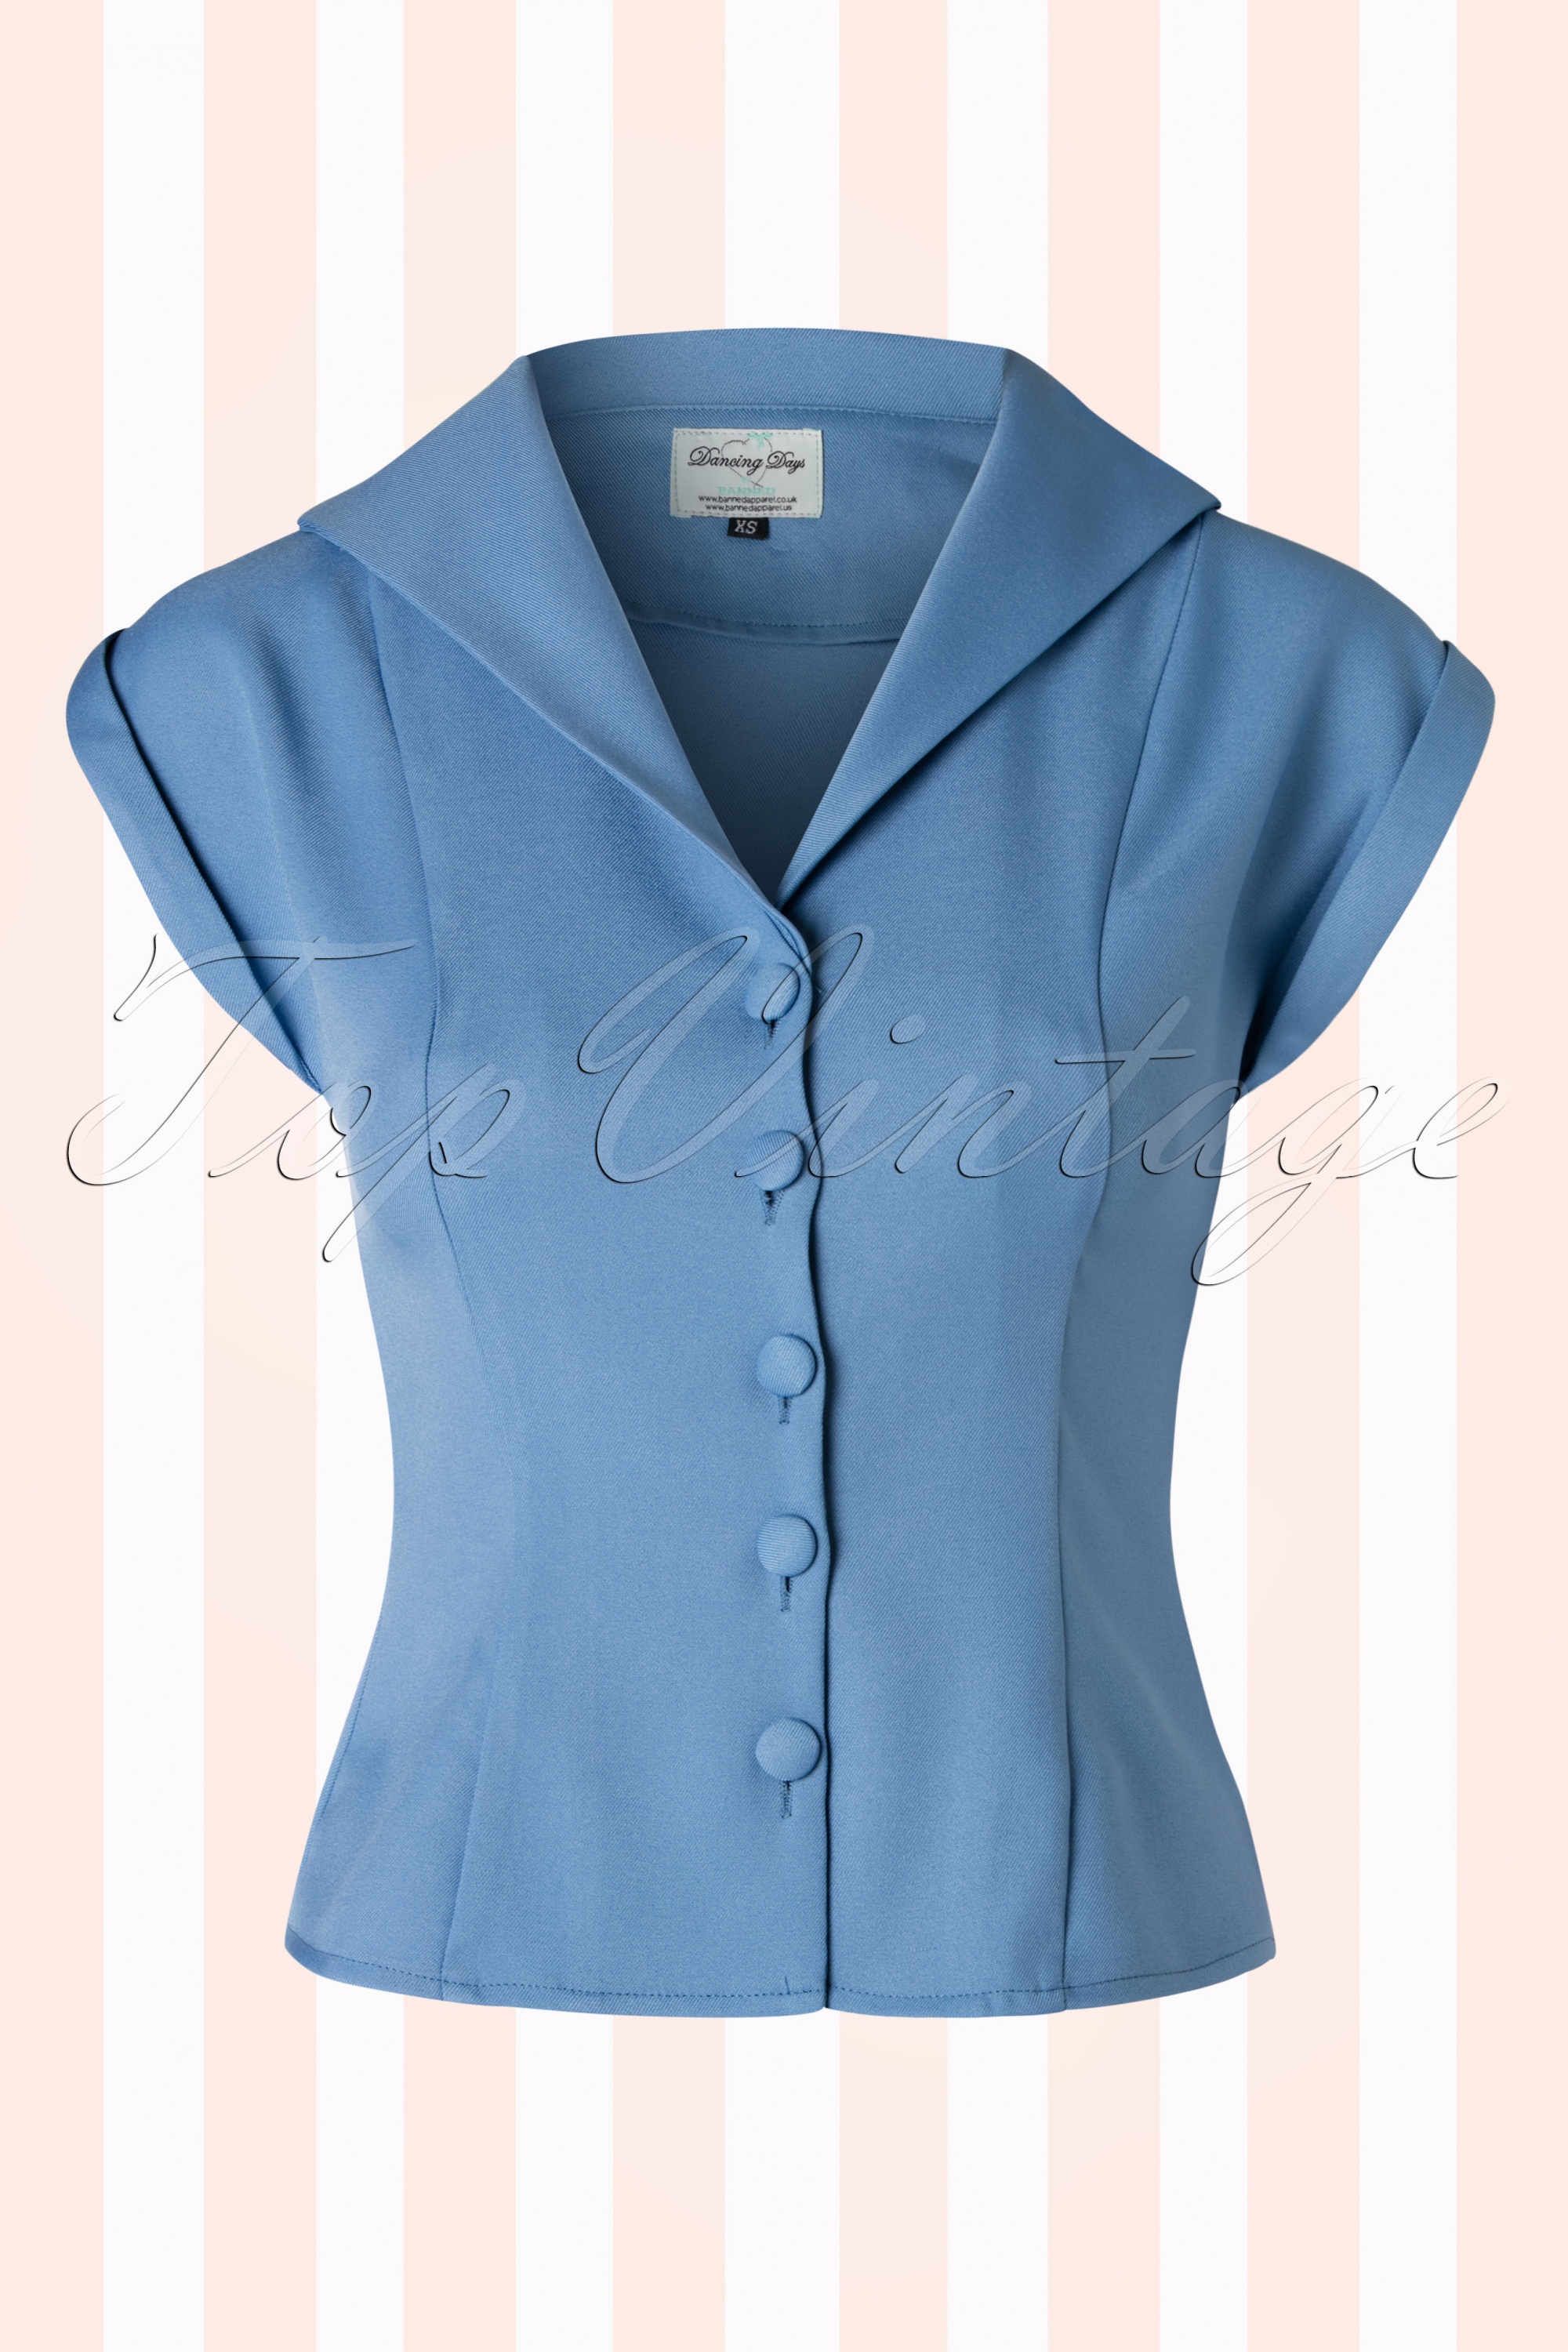 Banned Retro - Dream Master blouse met korte mouwen in mistig blauw